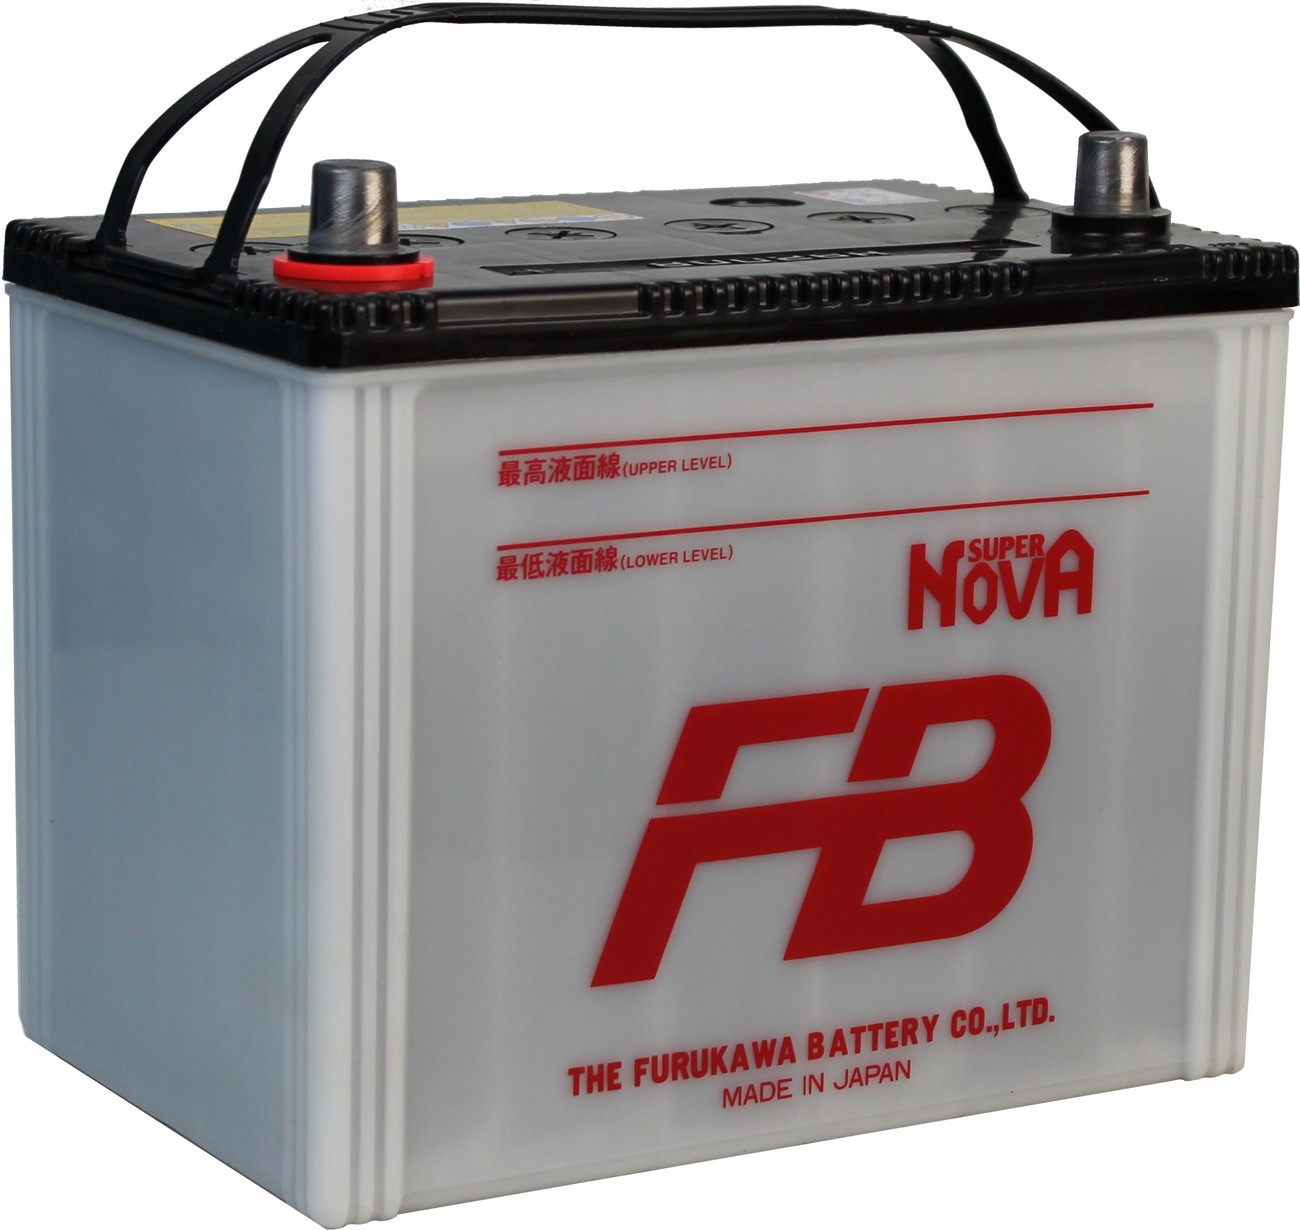 Furukawa battery fb. Автомобильный аккумулятор Furukawa Battery super Nova 80d26r. Аккумулятор fb super Nova 80d26r. Fb super Nova 80d26l (68r 700a 260x169x225). Furukawa аккумулятор fb super Nova.